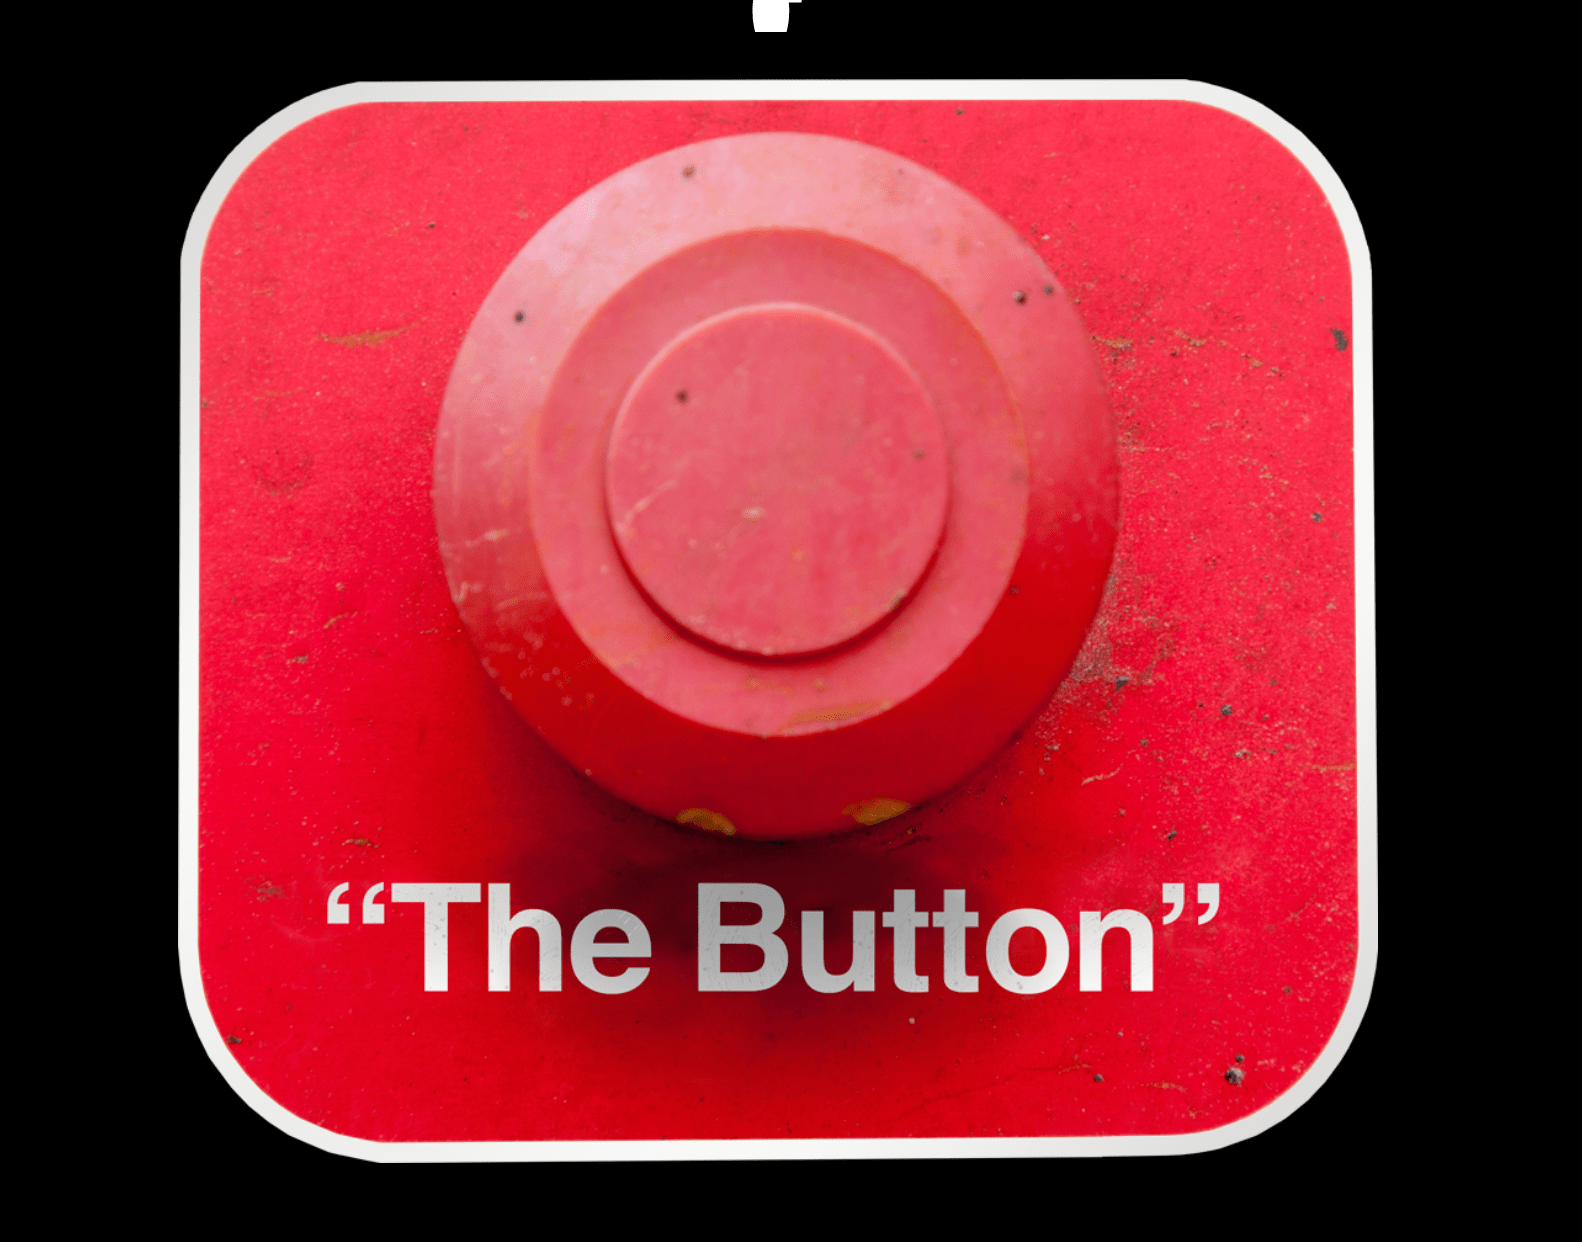 Comics publisher Bad Idea launches marketing campaign called 'The Button'